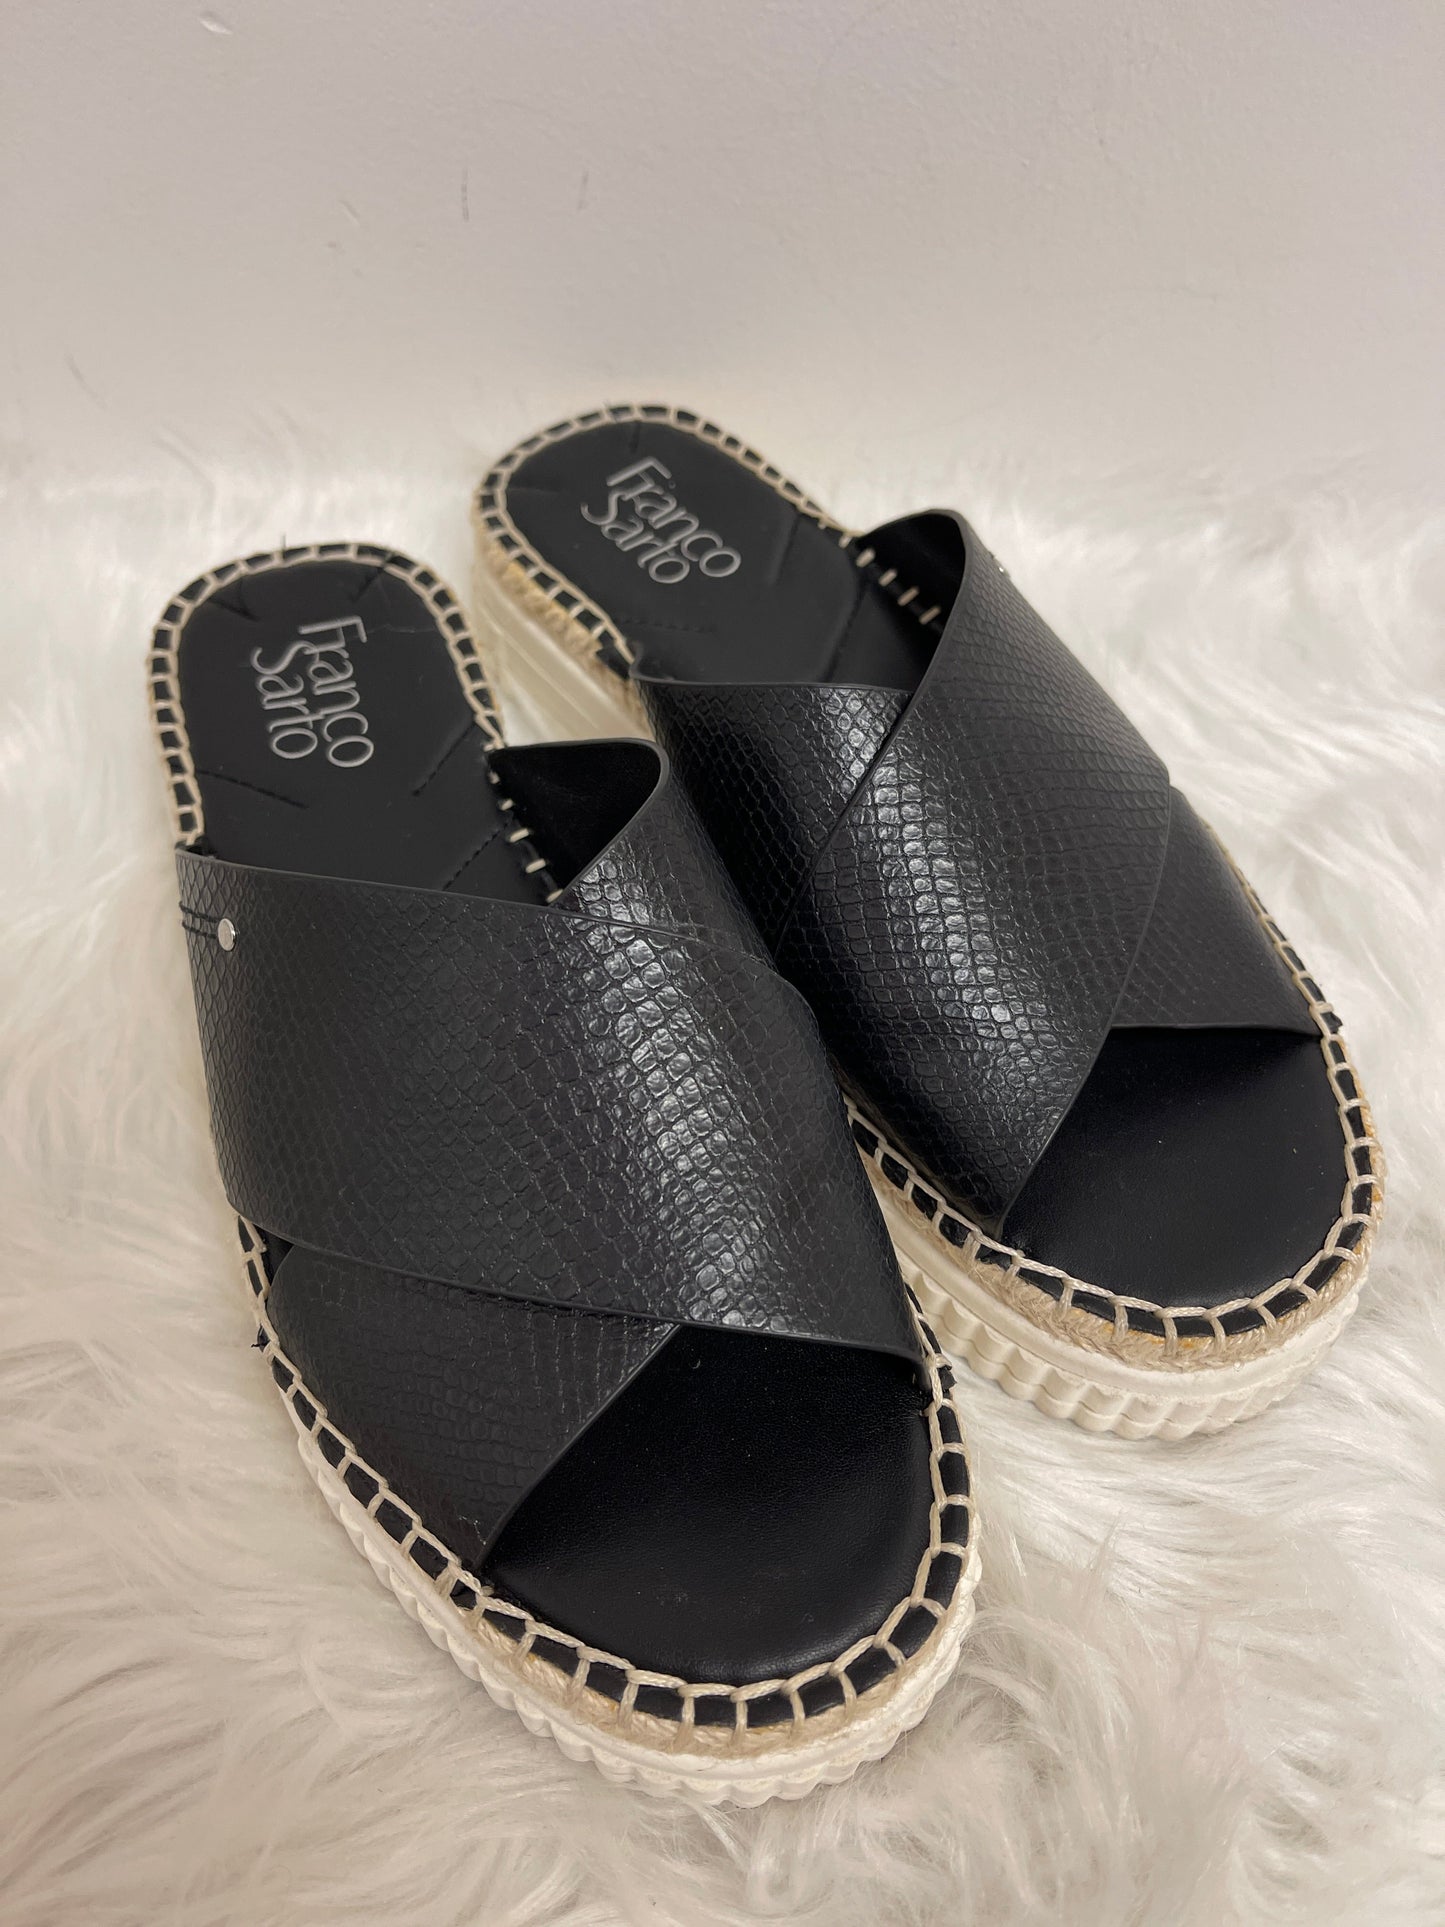 Black Sandals Heels Platform Franco Sarto, Size 8